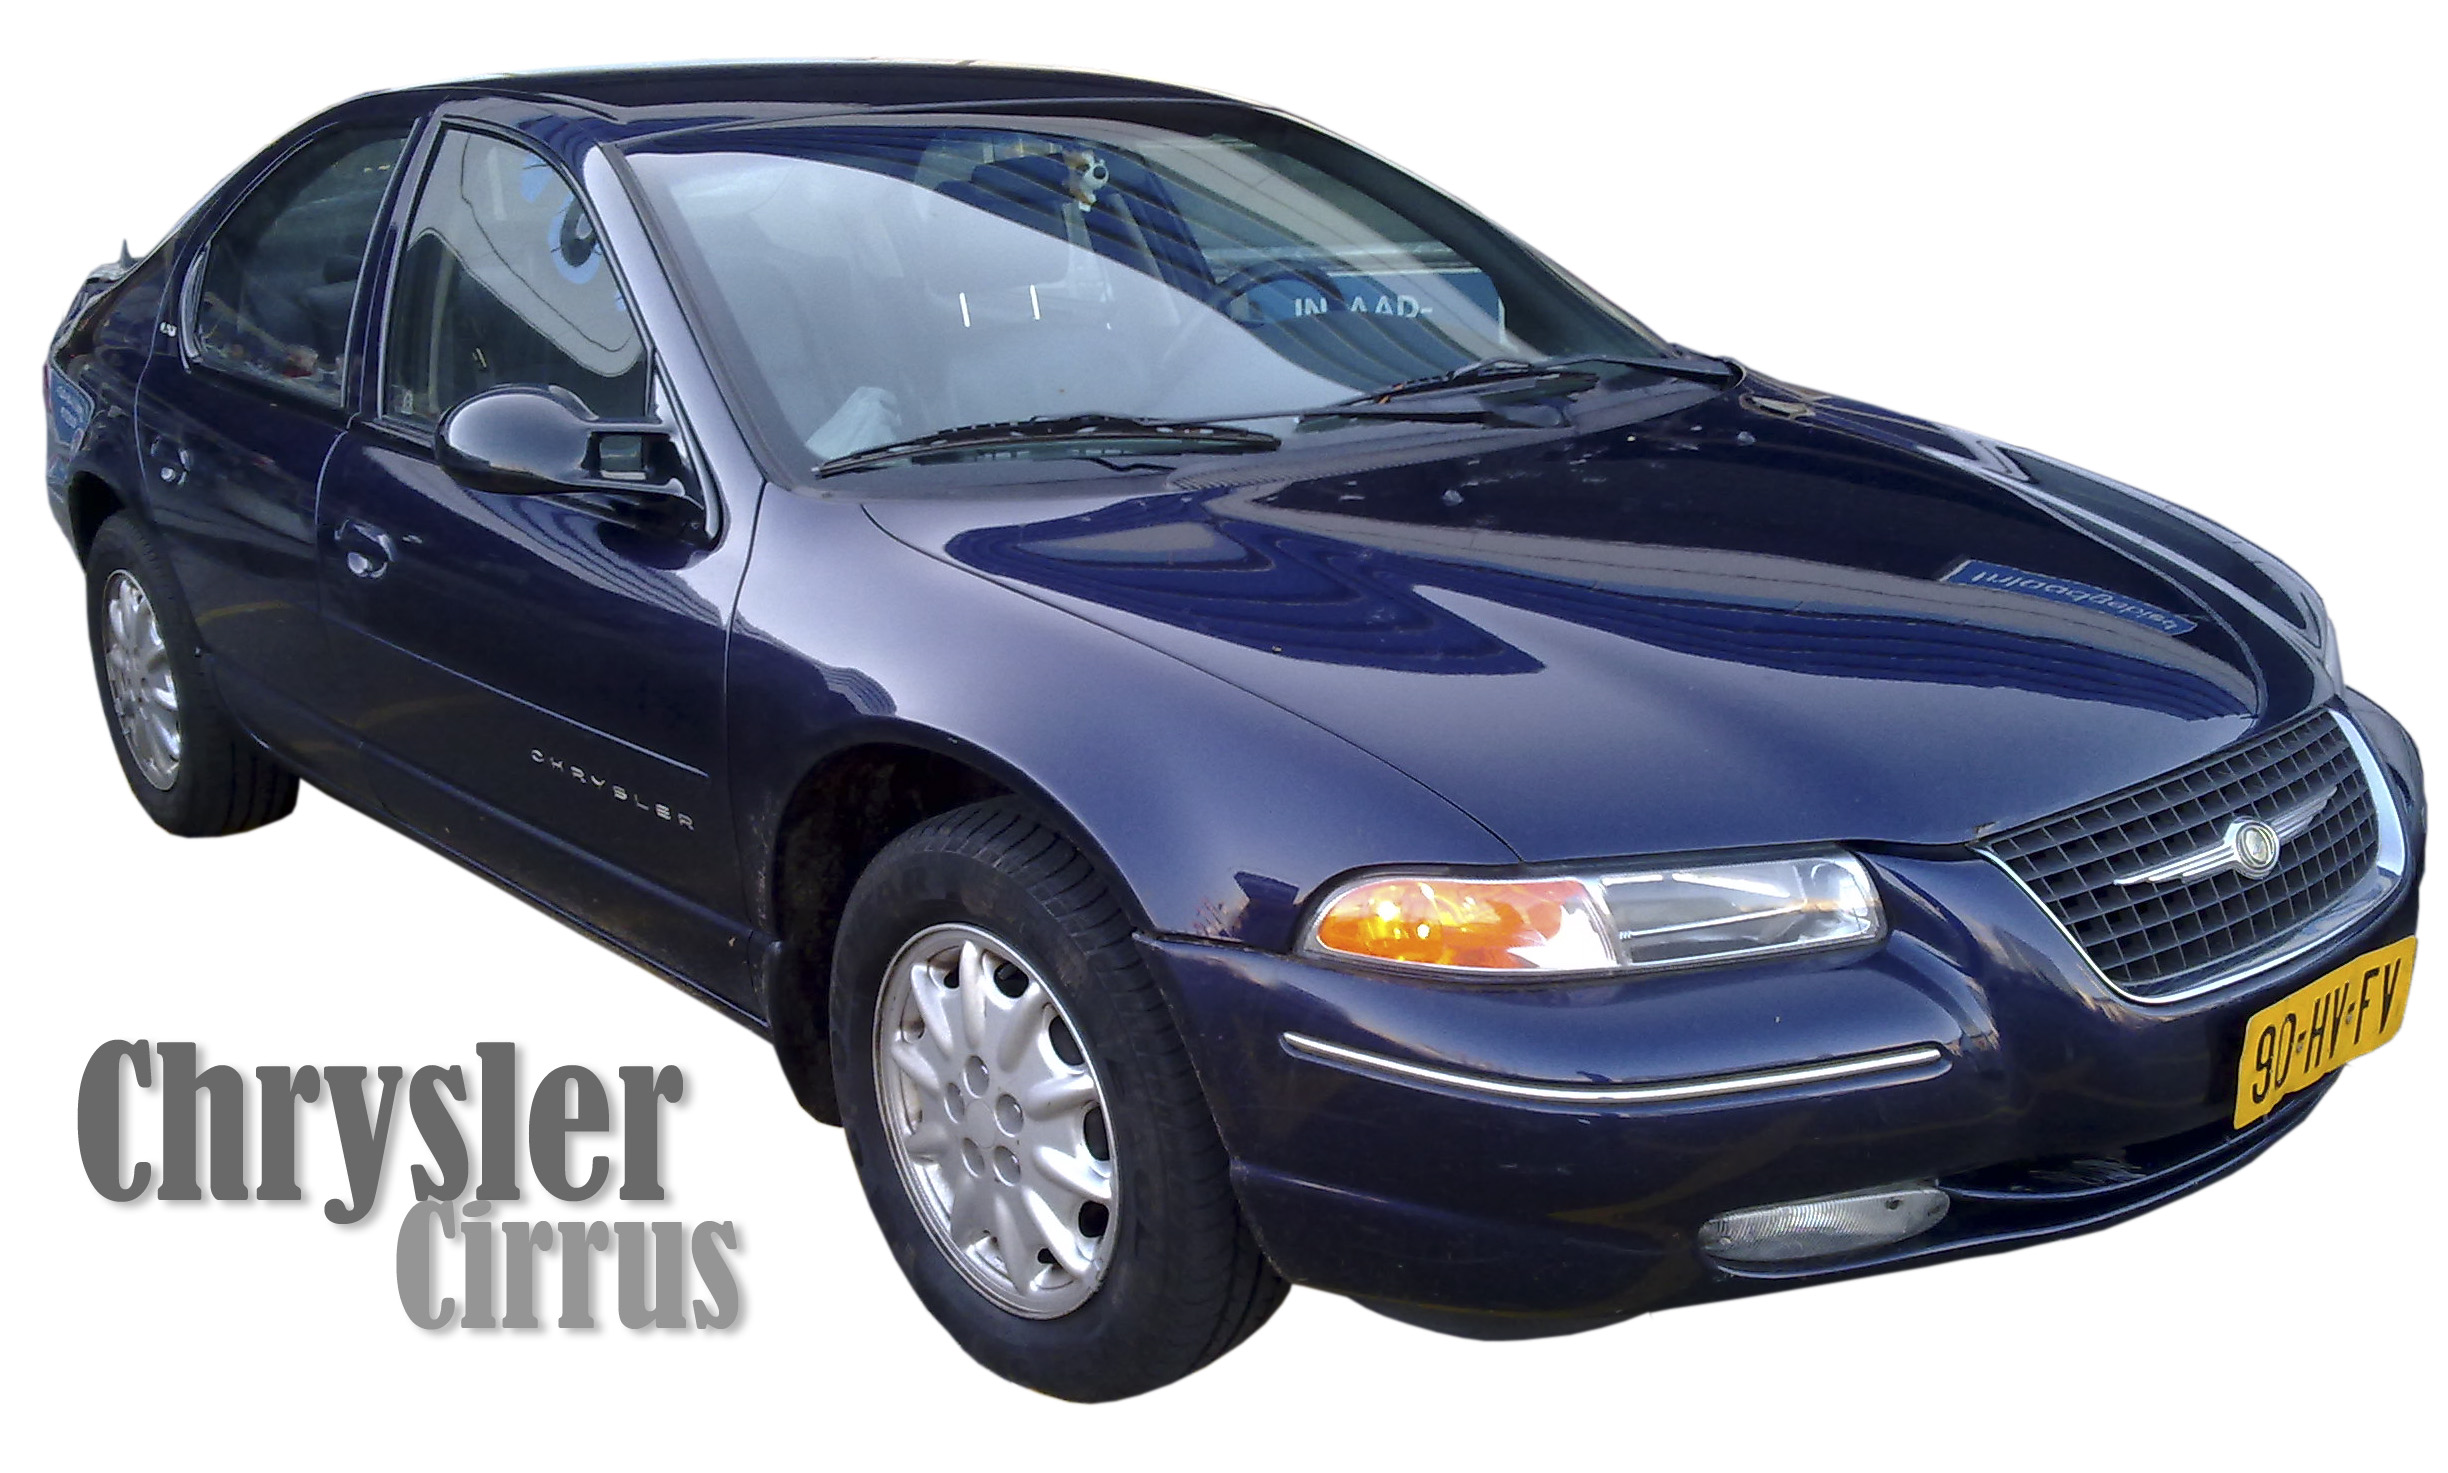 Chrysler cirrus 2000